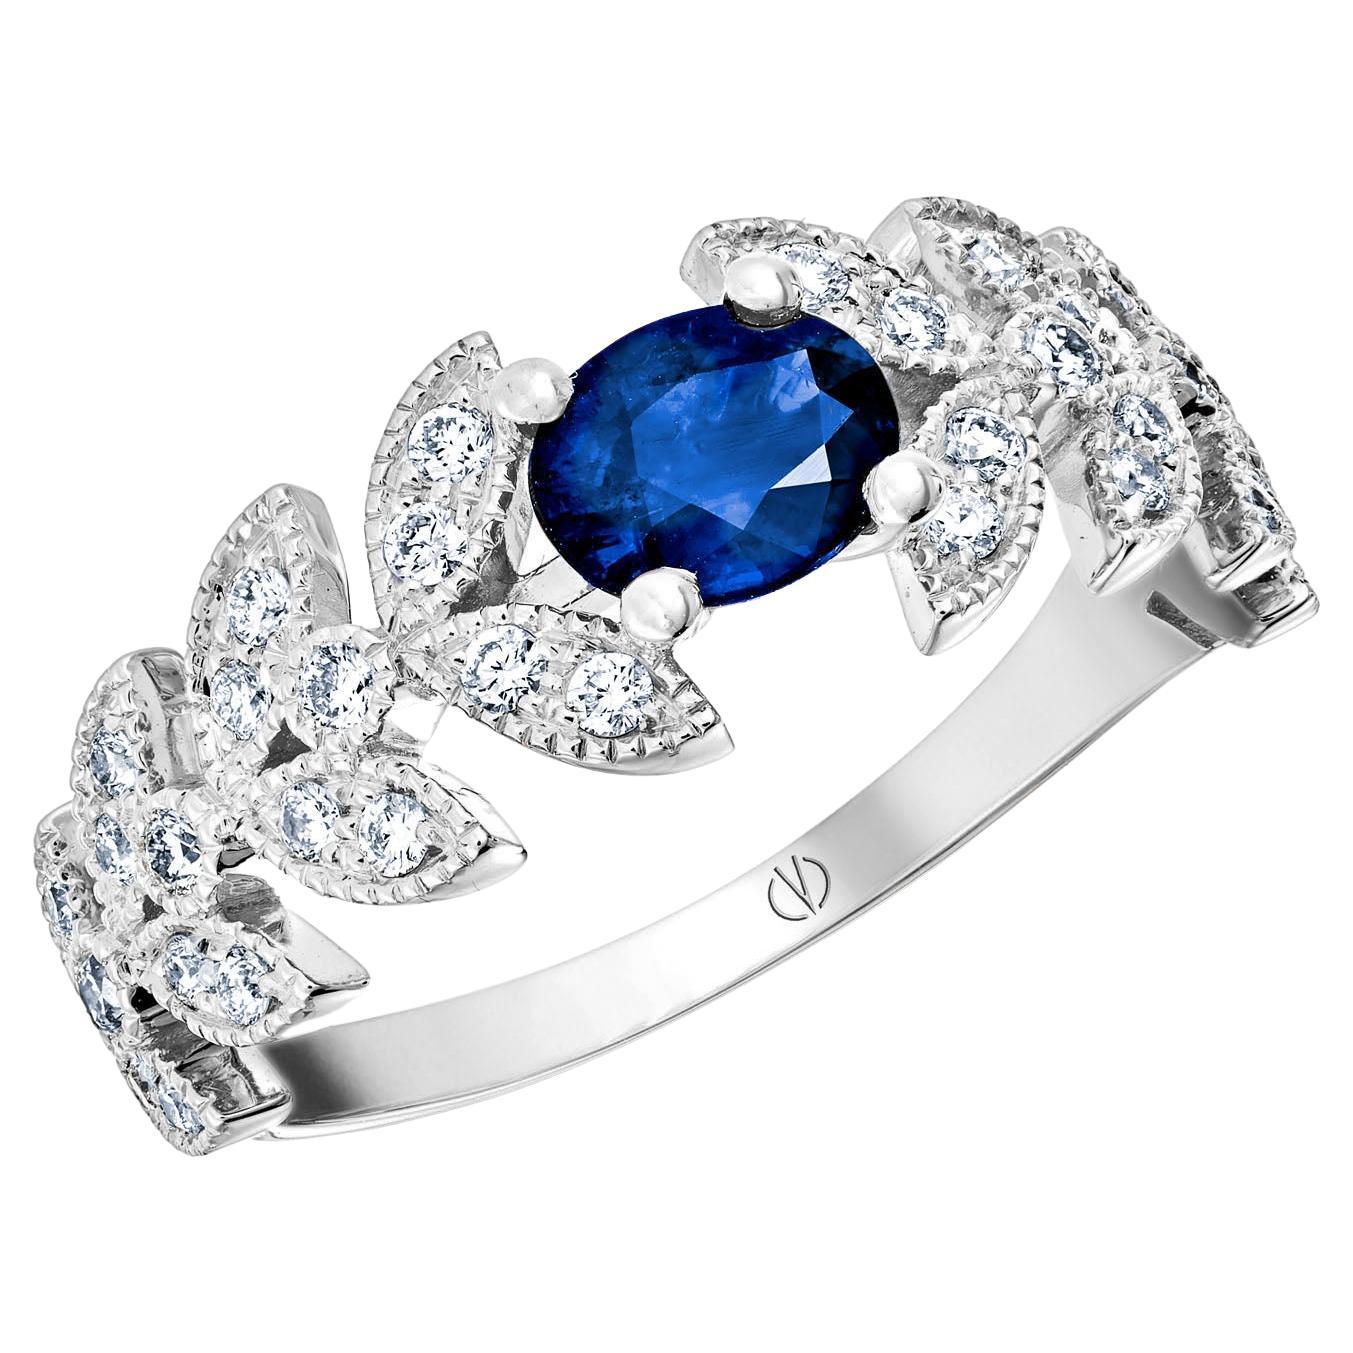 For Sale:  18k White Gold Laurel Leaf Design Ring Set with 1.53 Ct Royal Blue Oval Sapphire